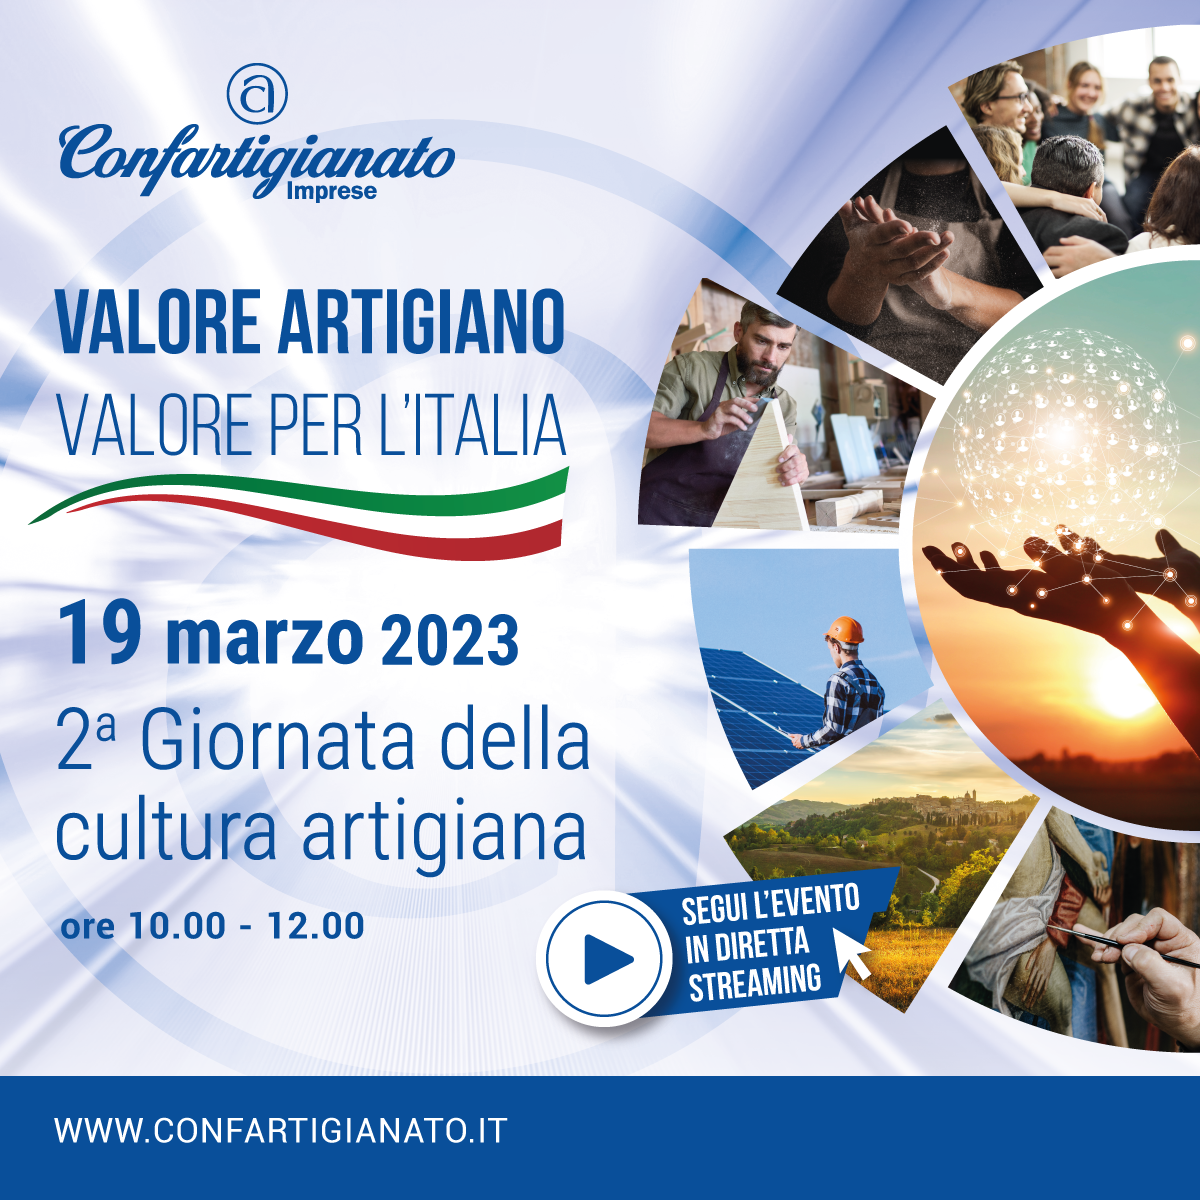 Giornata cultura artigiana 2023 programma valore artigiano confartigianato Cesare Fumagalli